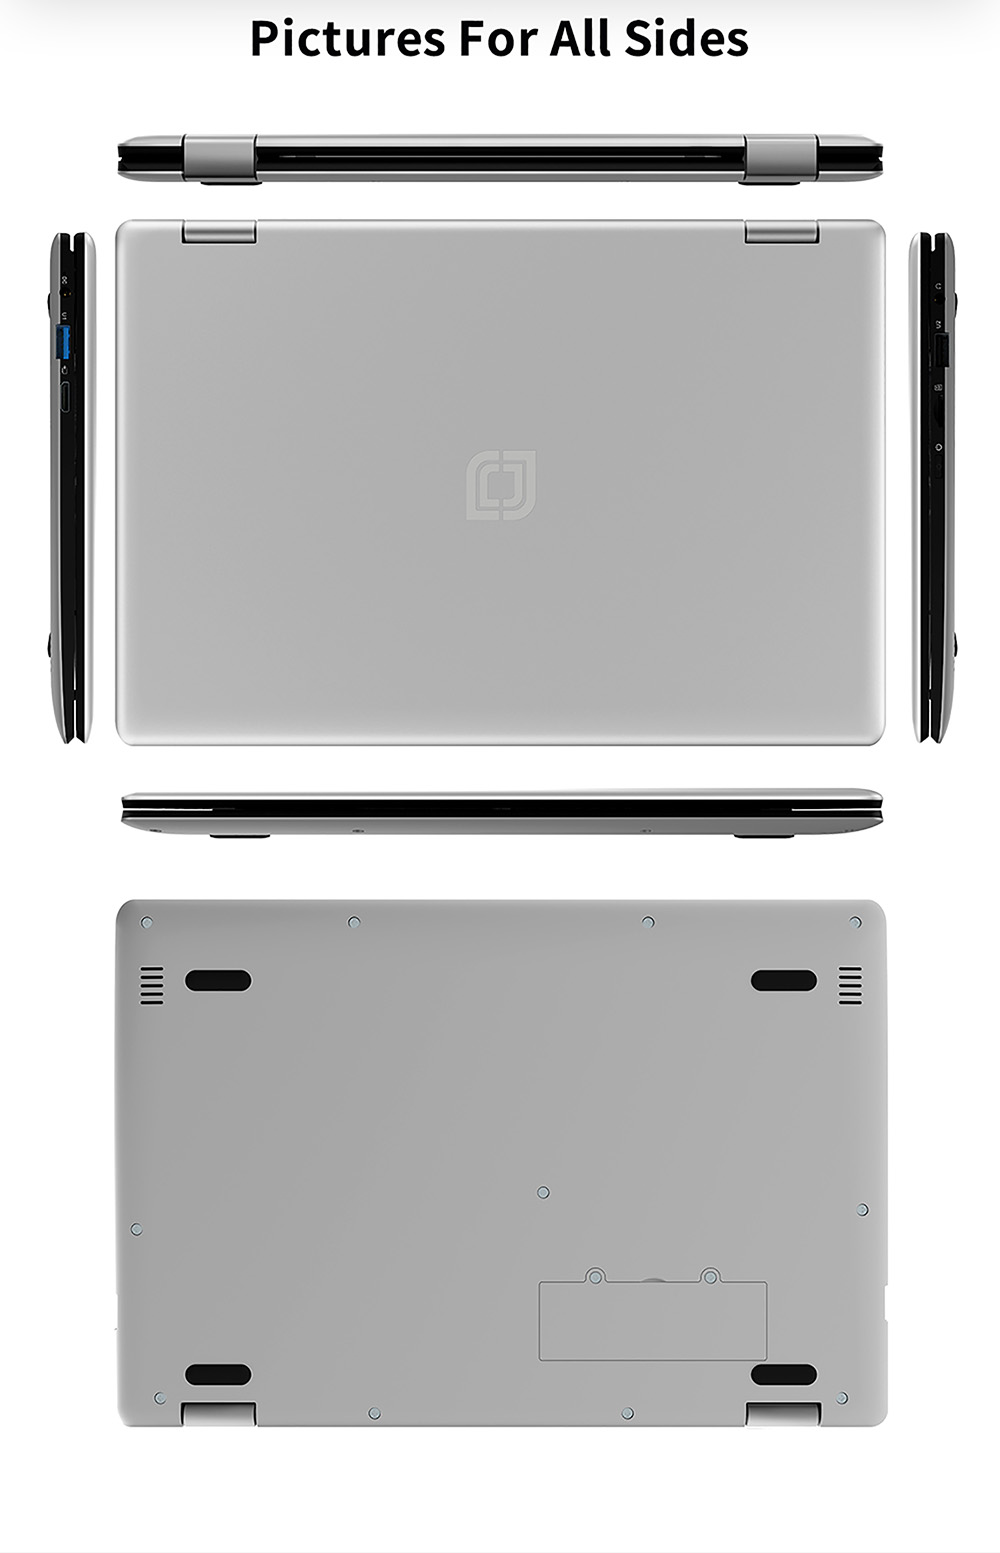 Jumper EZbook X1S Tabletă 2-în-1 Intel Gemini Lake N4000